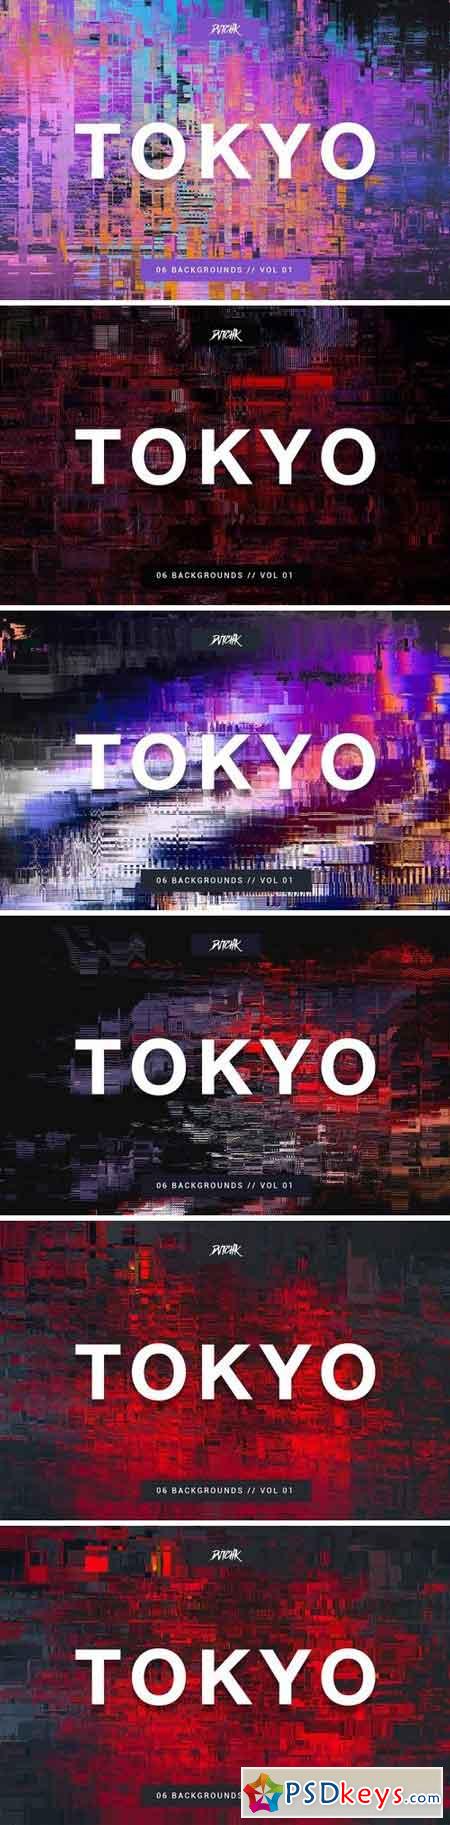 Tokyo City Glitch Bgs Vol. 01 2802233